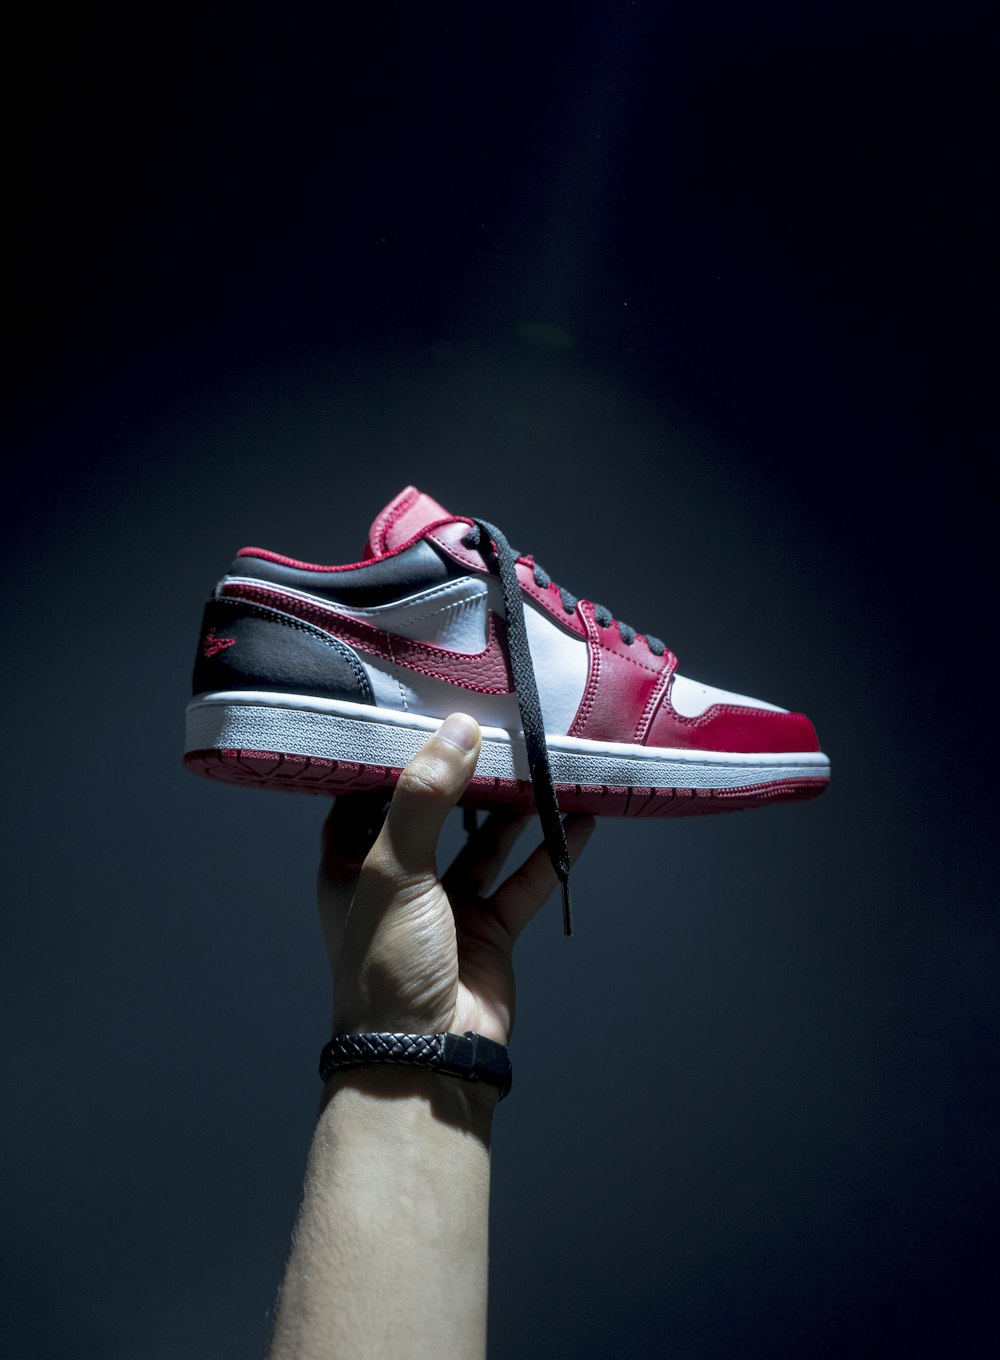 Nike Jordan Wallpaper Pictures | Download Free Images on Unsplash